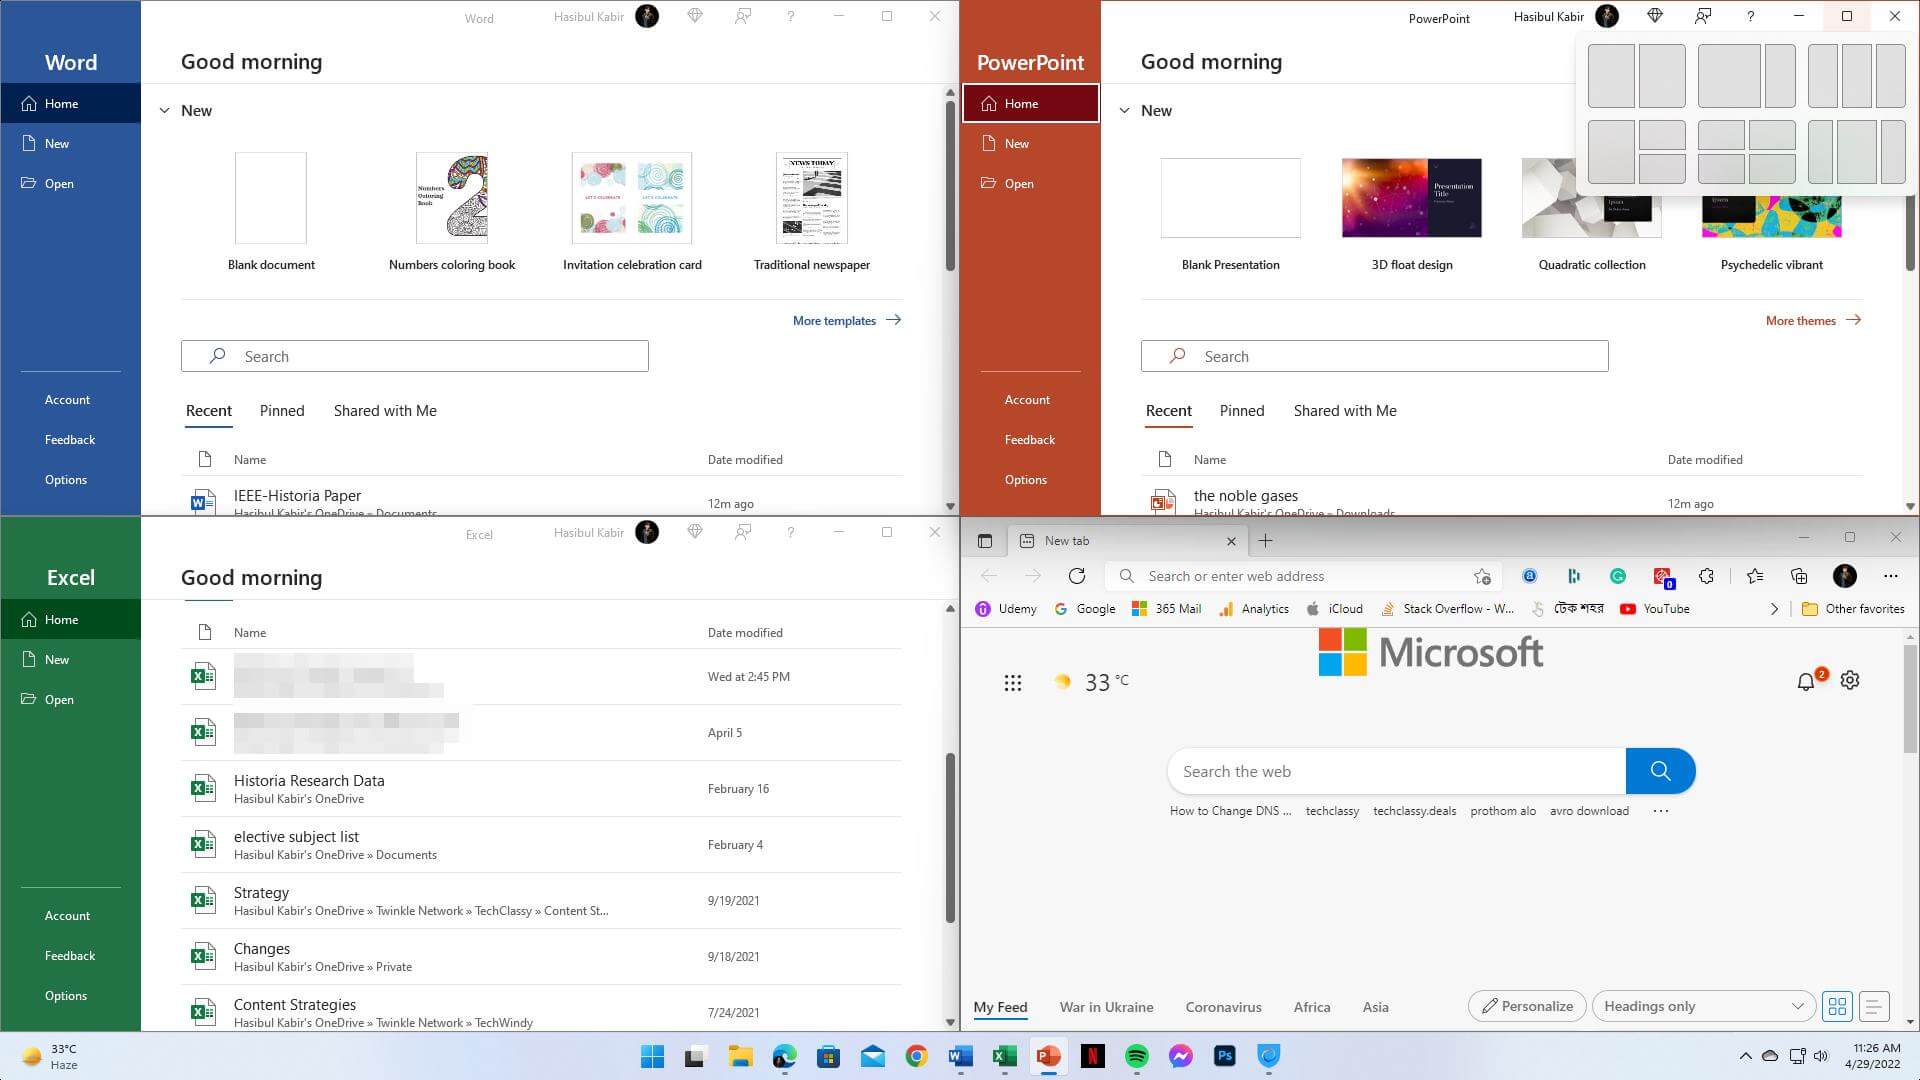 Windows 11 snap layout